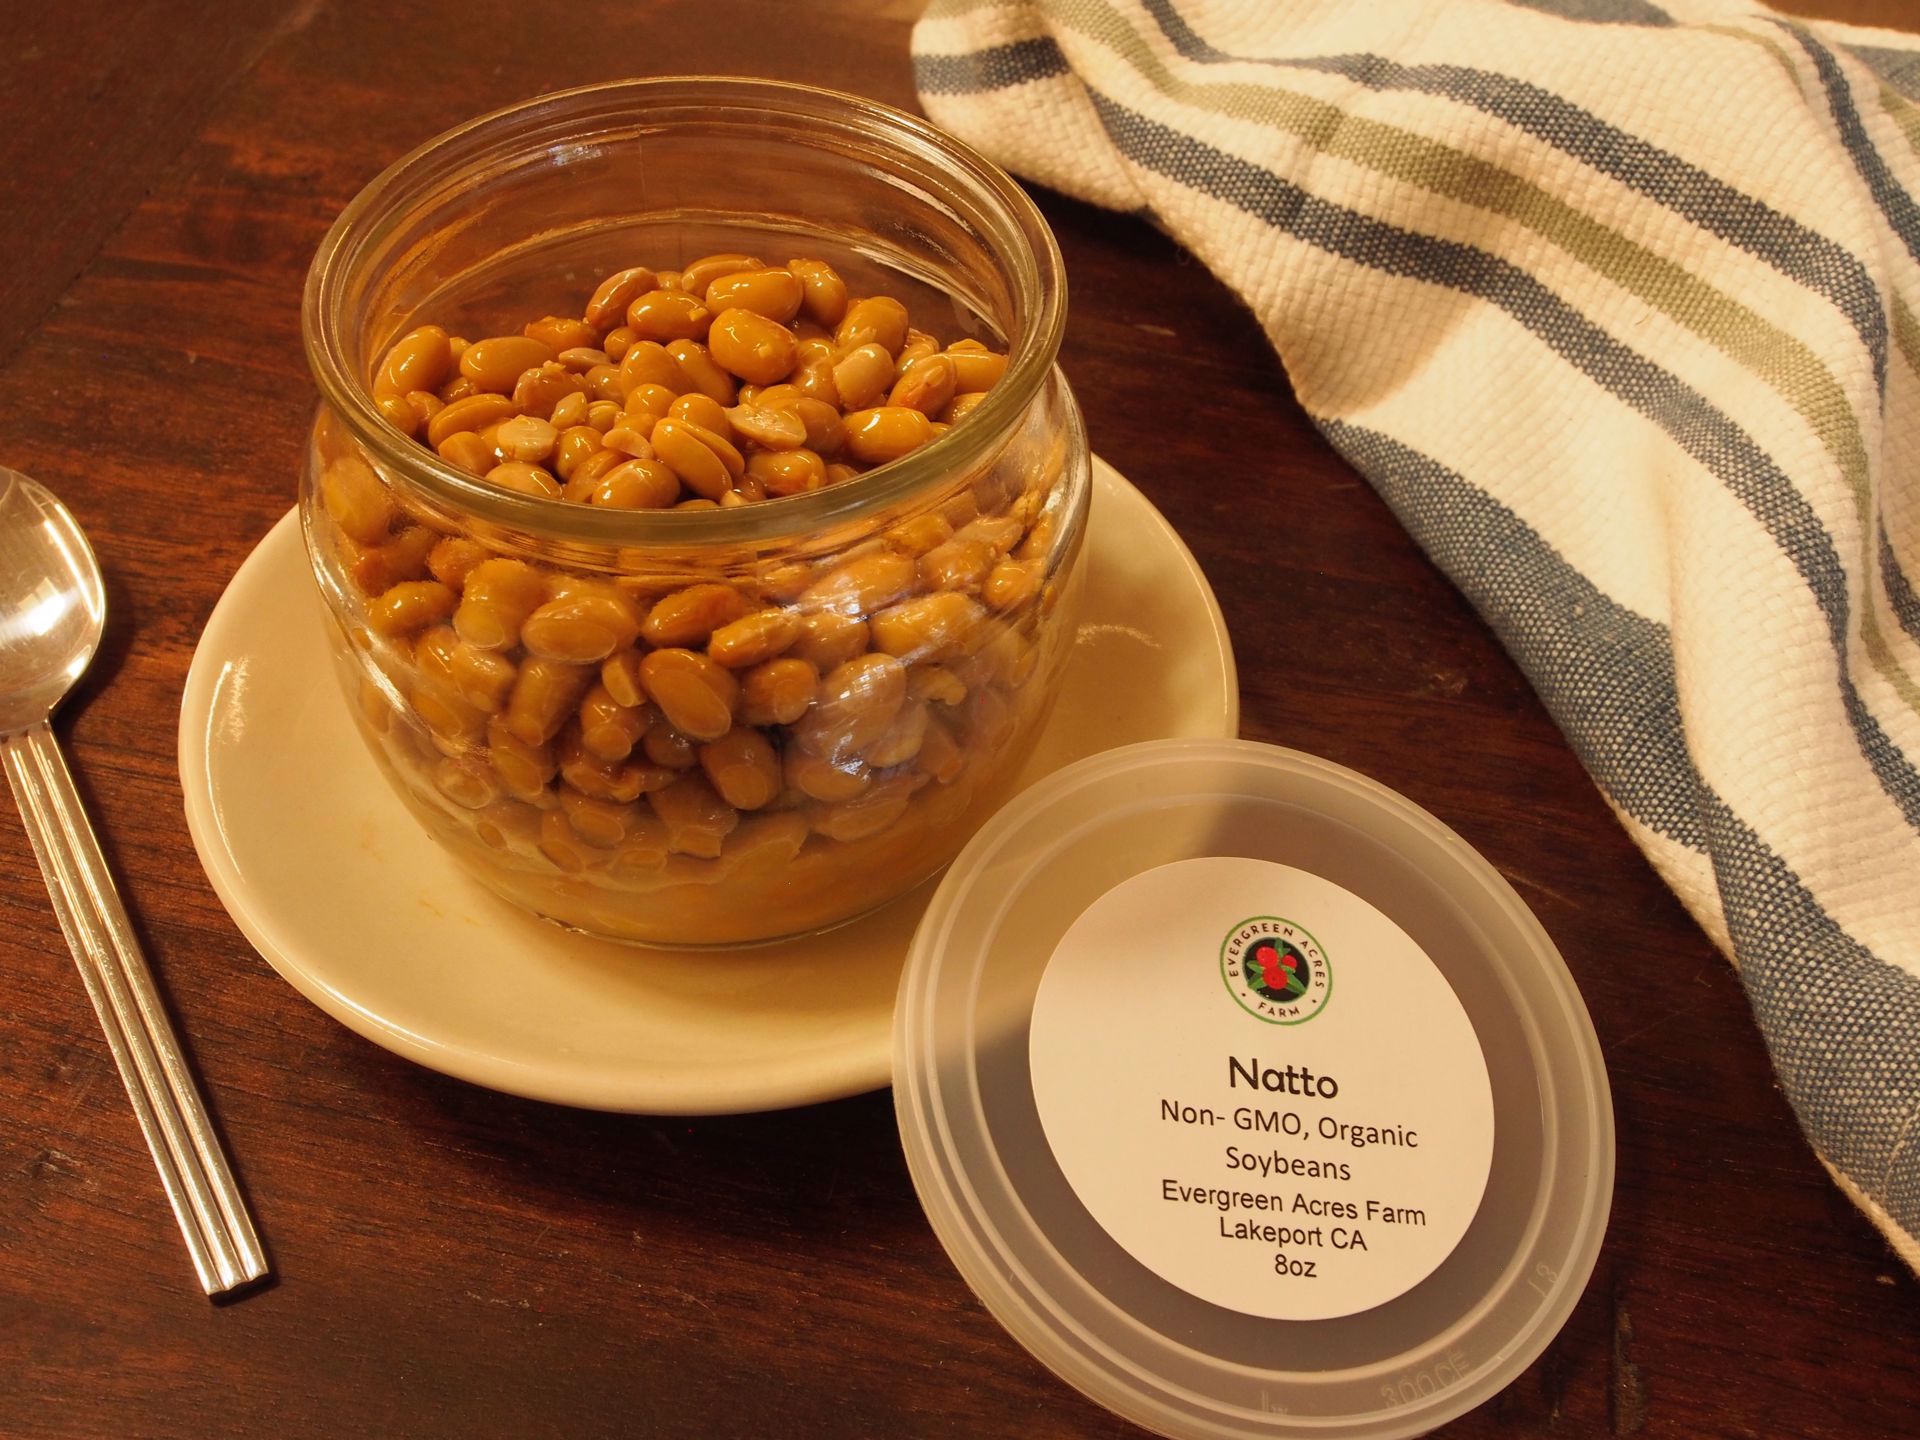 Picture of Evergreen Acres Farm Non-GMO Soybeans Natto